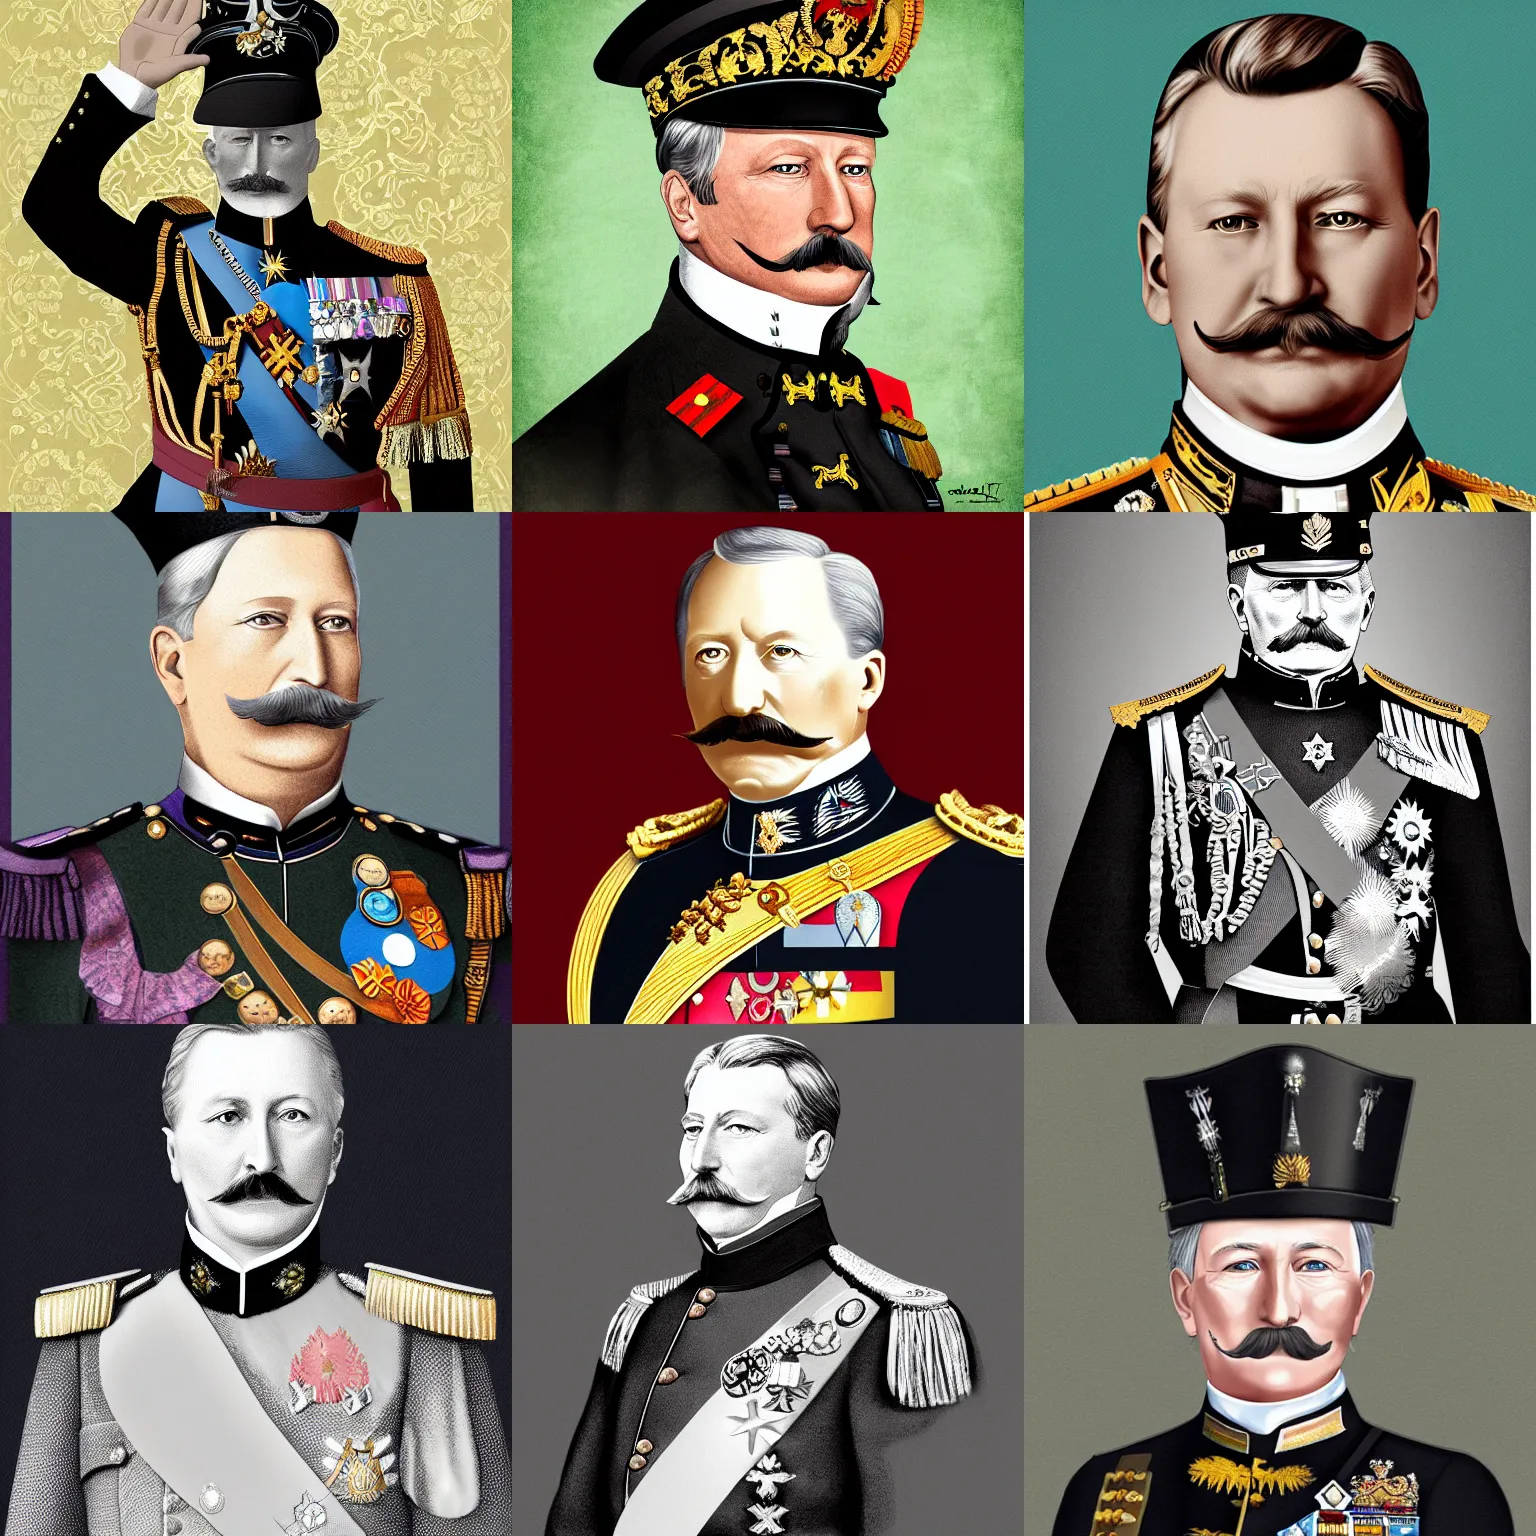 Prompt: An illustration of The Emperor Wilhelm II of Germany, German Emperor, illustration by Daiana Ruiz, digital art